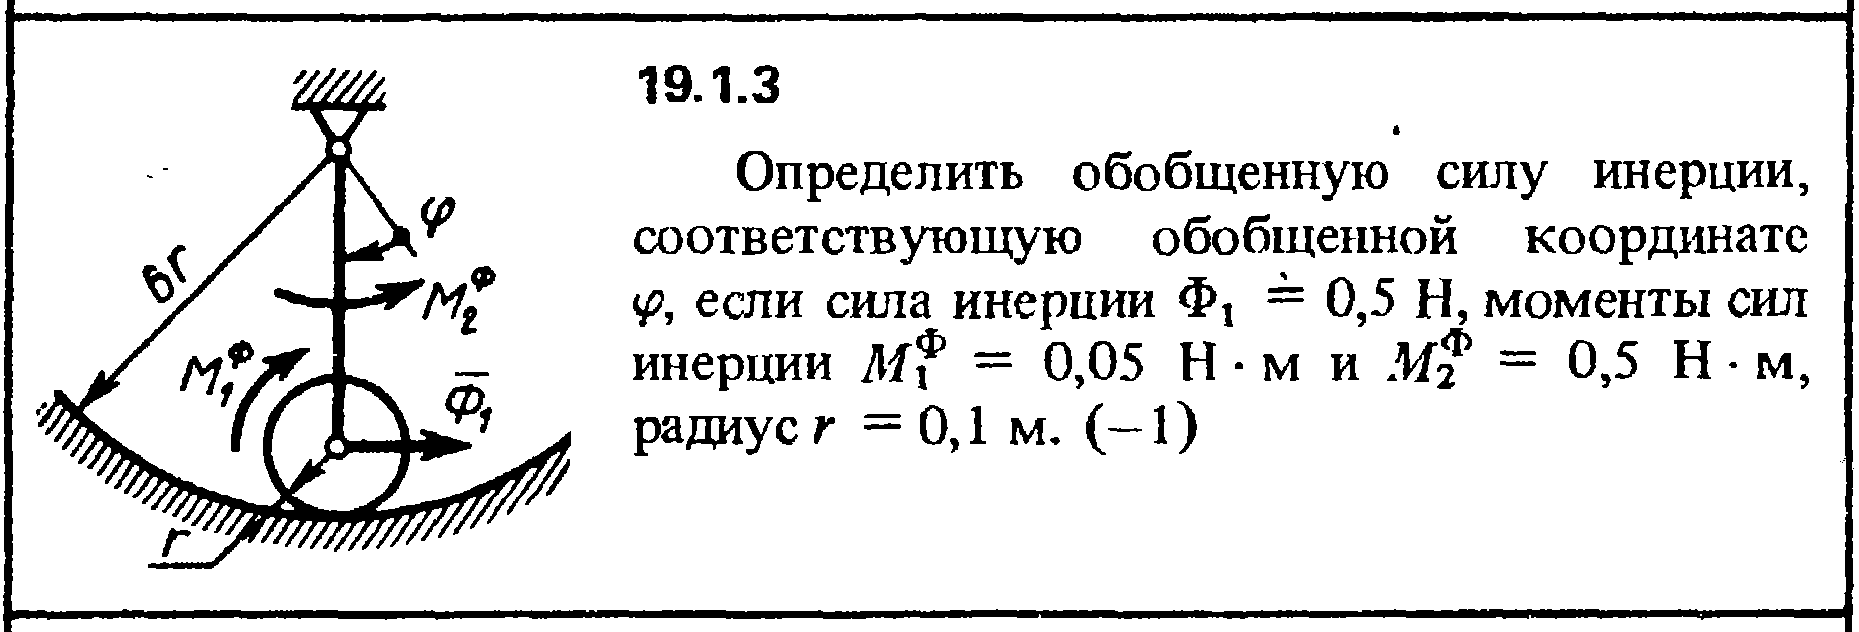 Решение 19.1.3 из сборника (решебника) Кепе О.Е. 1989 г